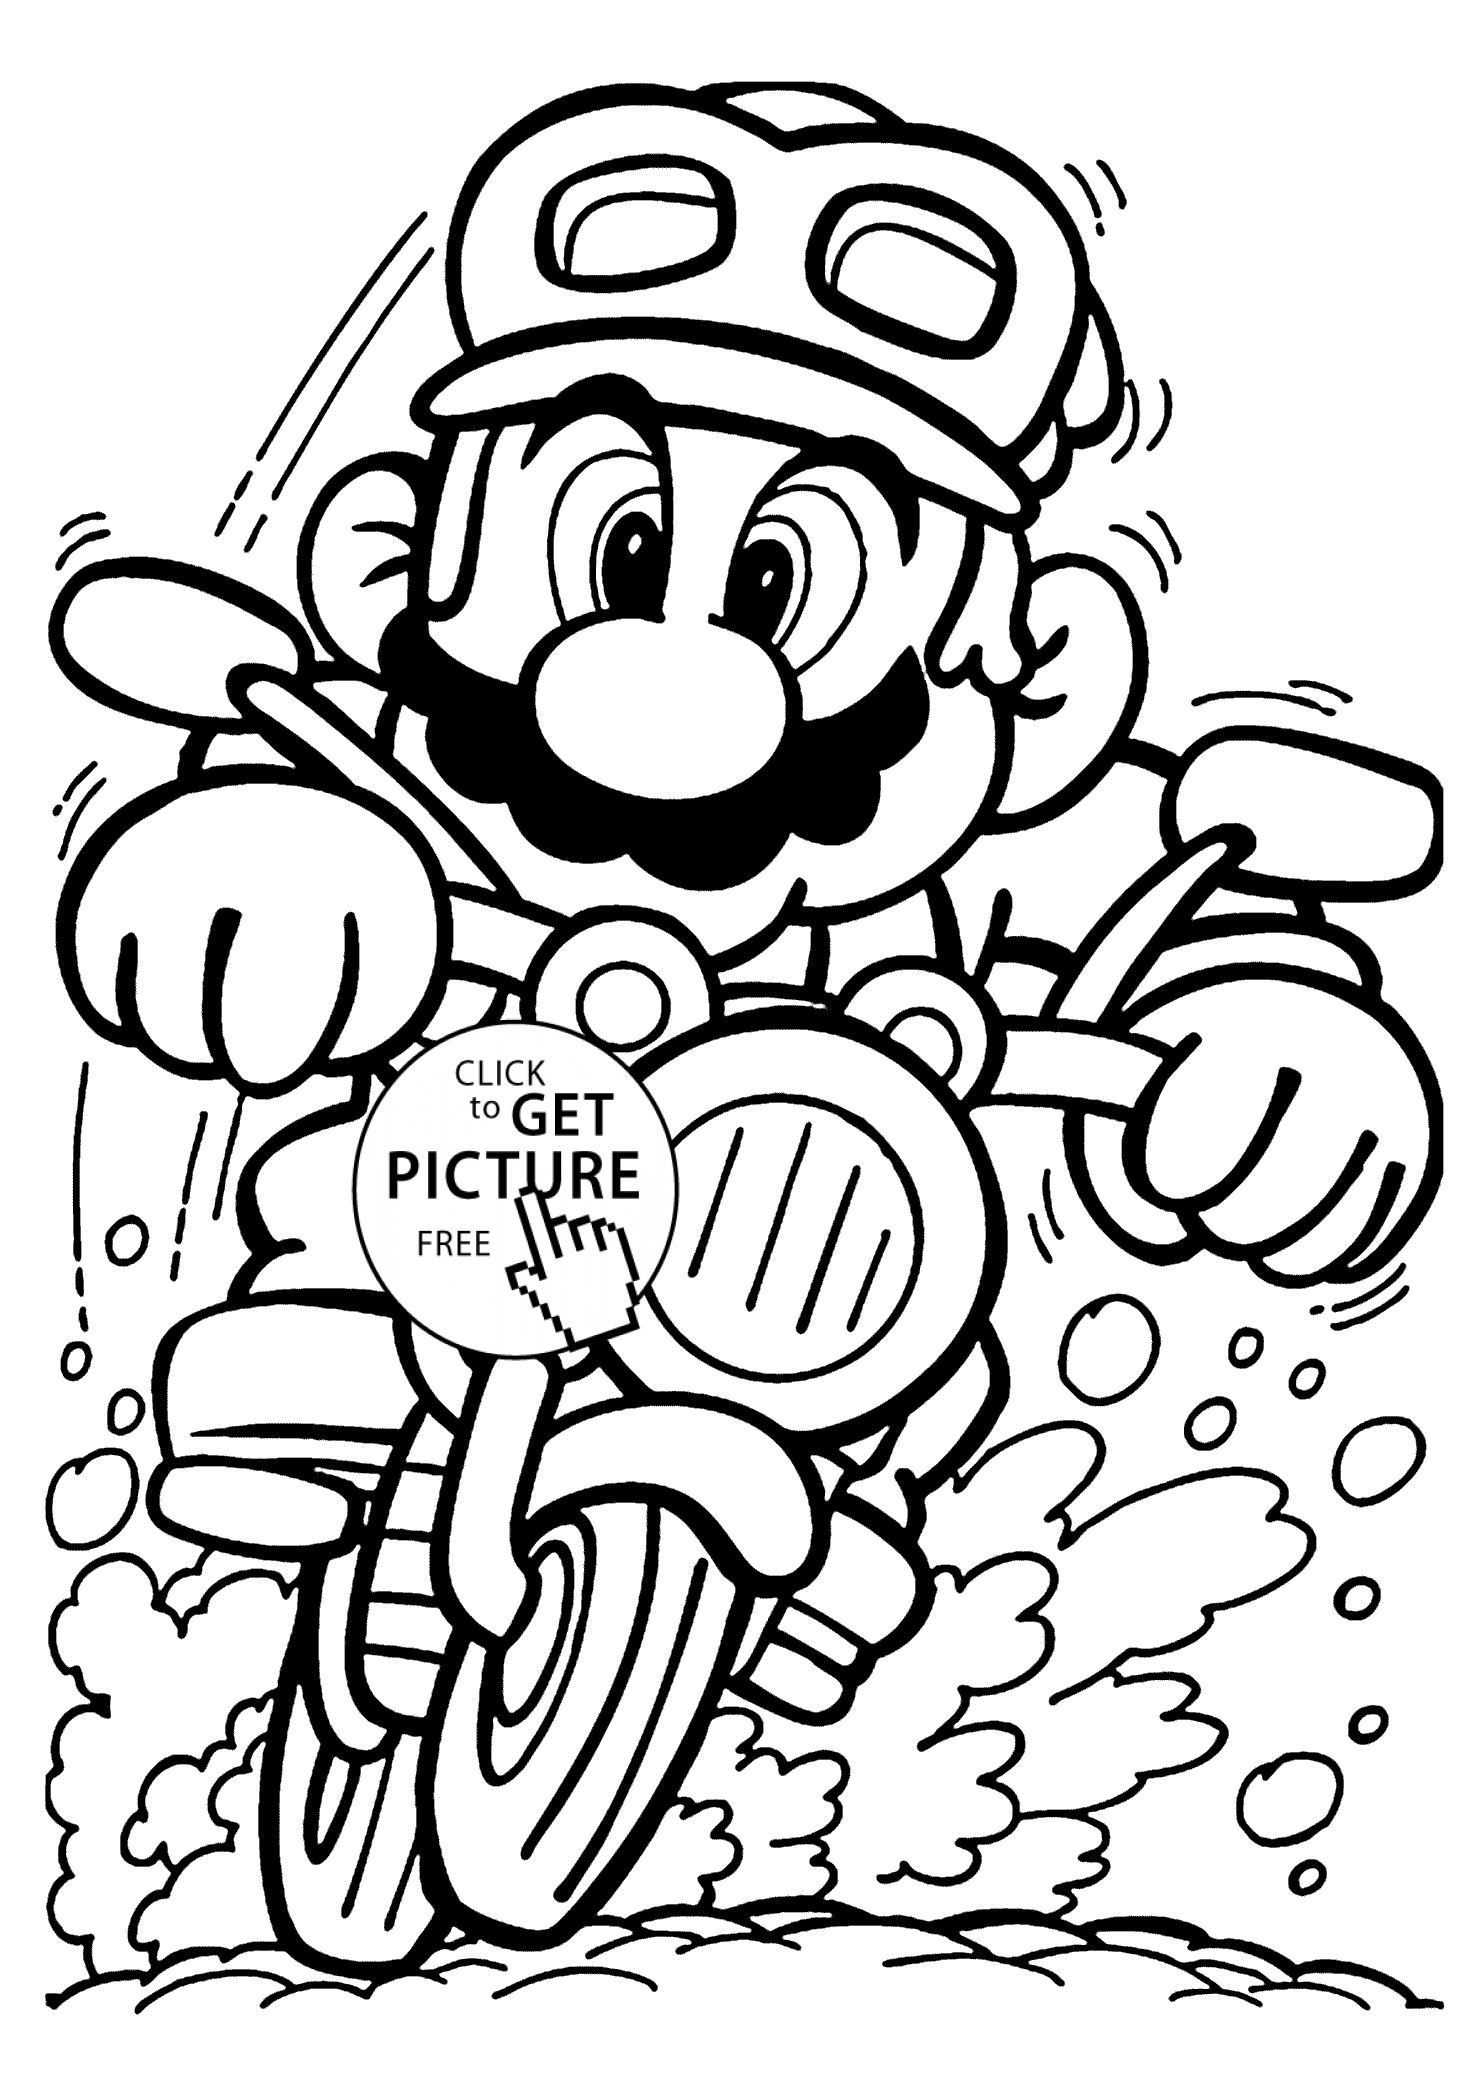 Mario Coloring Pages Printable Free
 Mario on motorcycle coloring pages for kids printable free